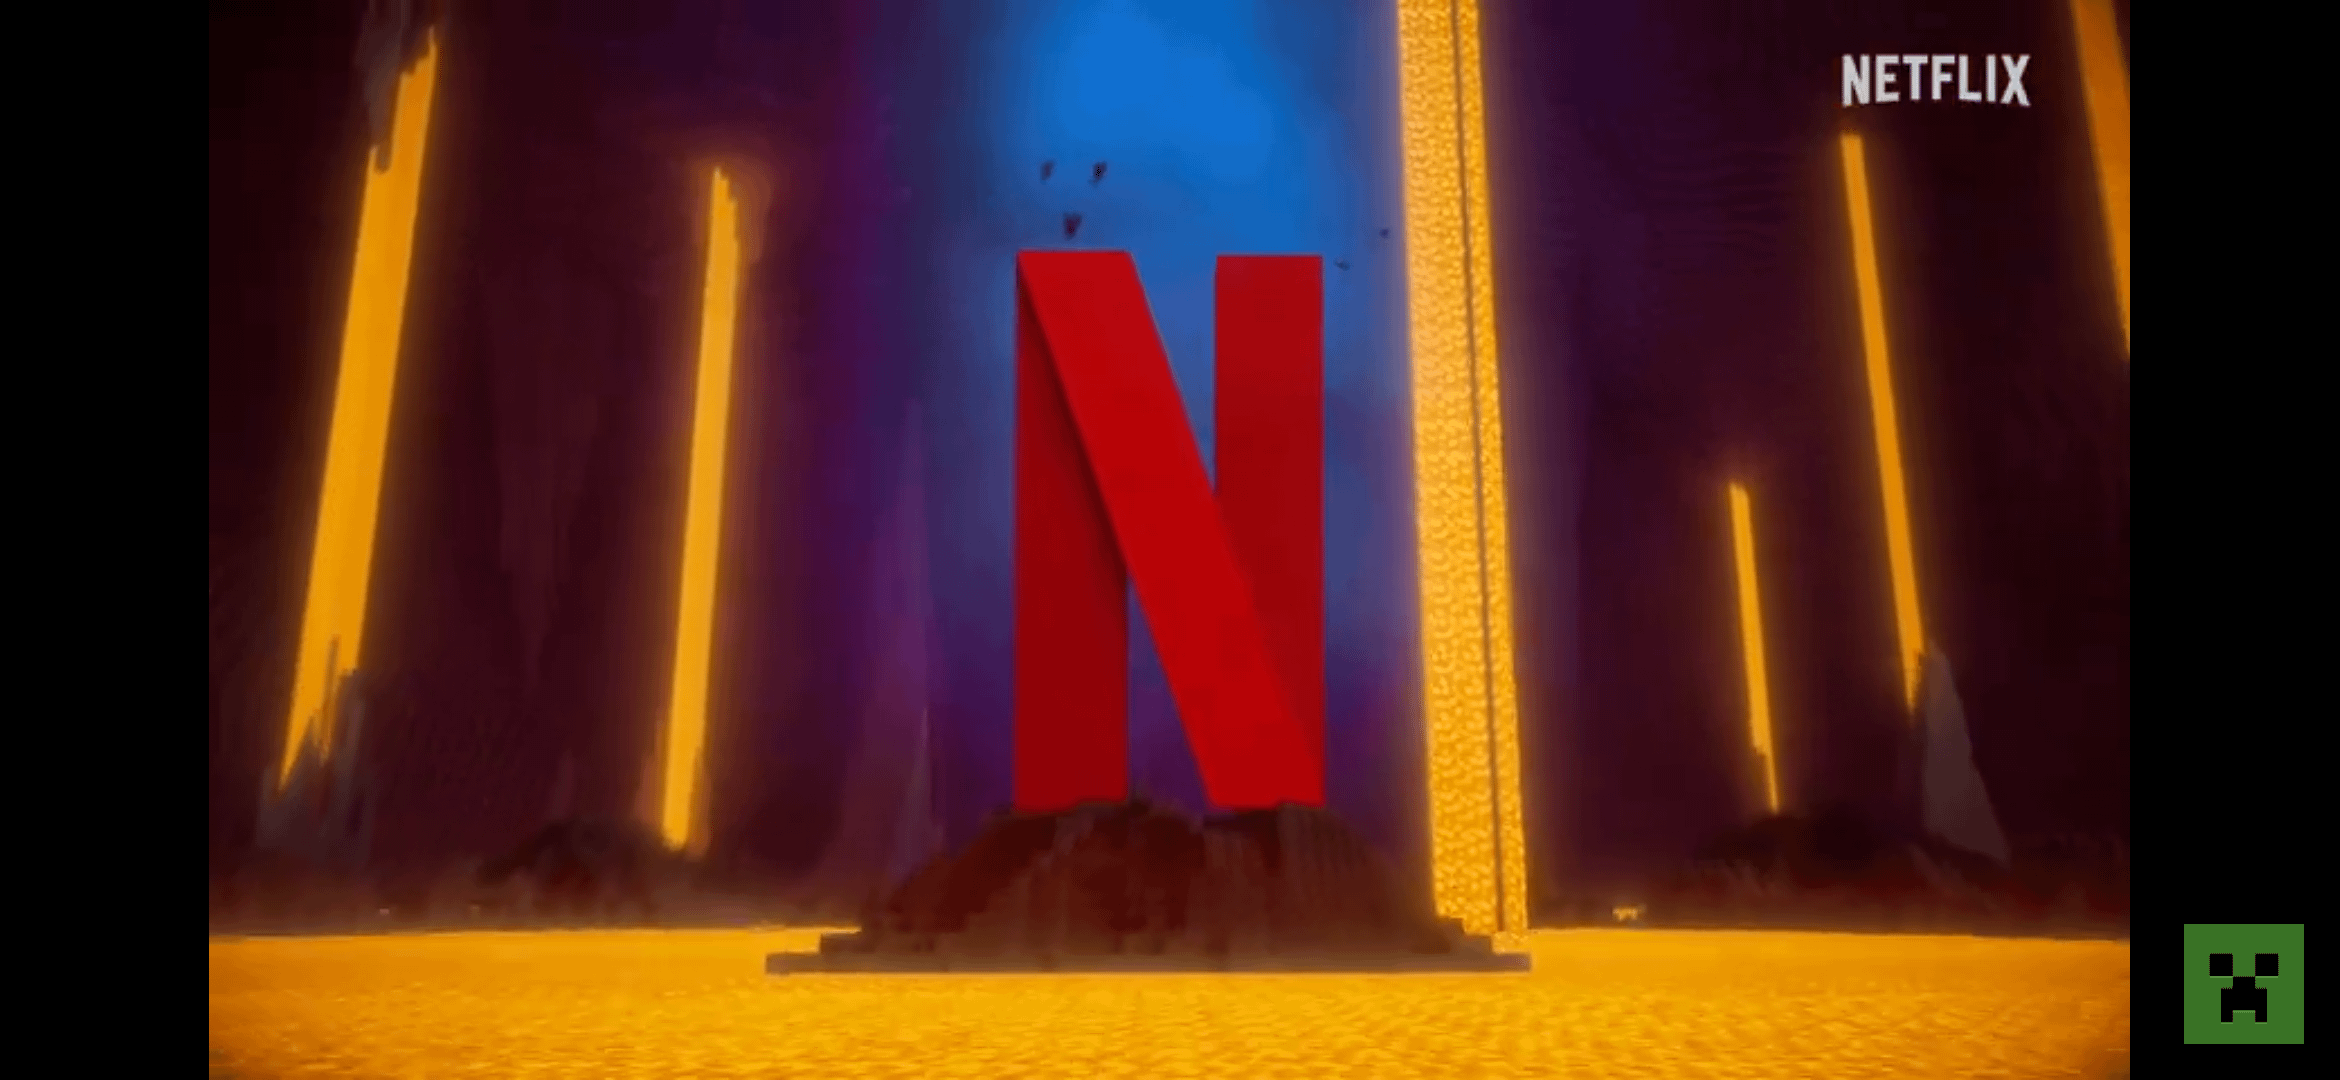 Minecraft Memes - Minecraft x Netflix series confirmed - thoughts? 🤔